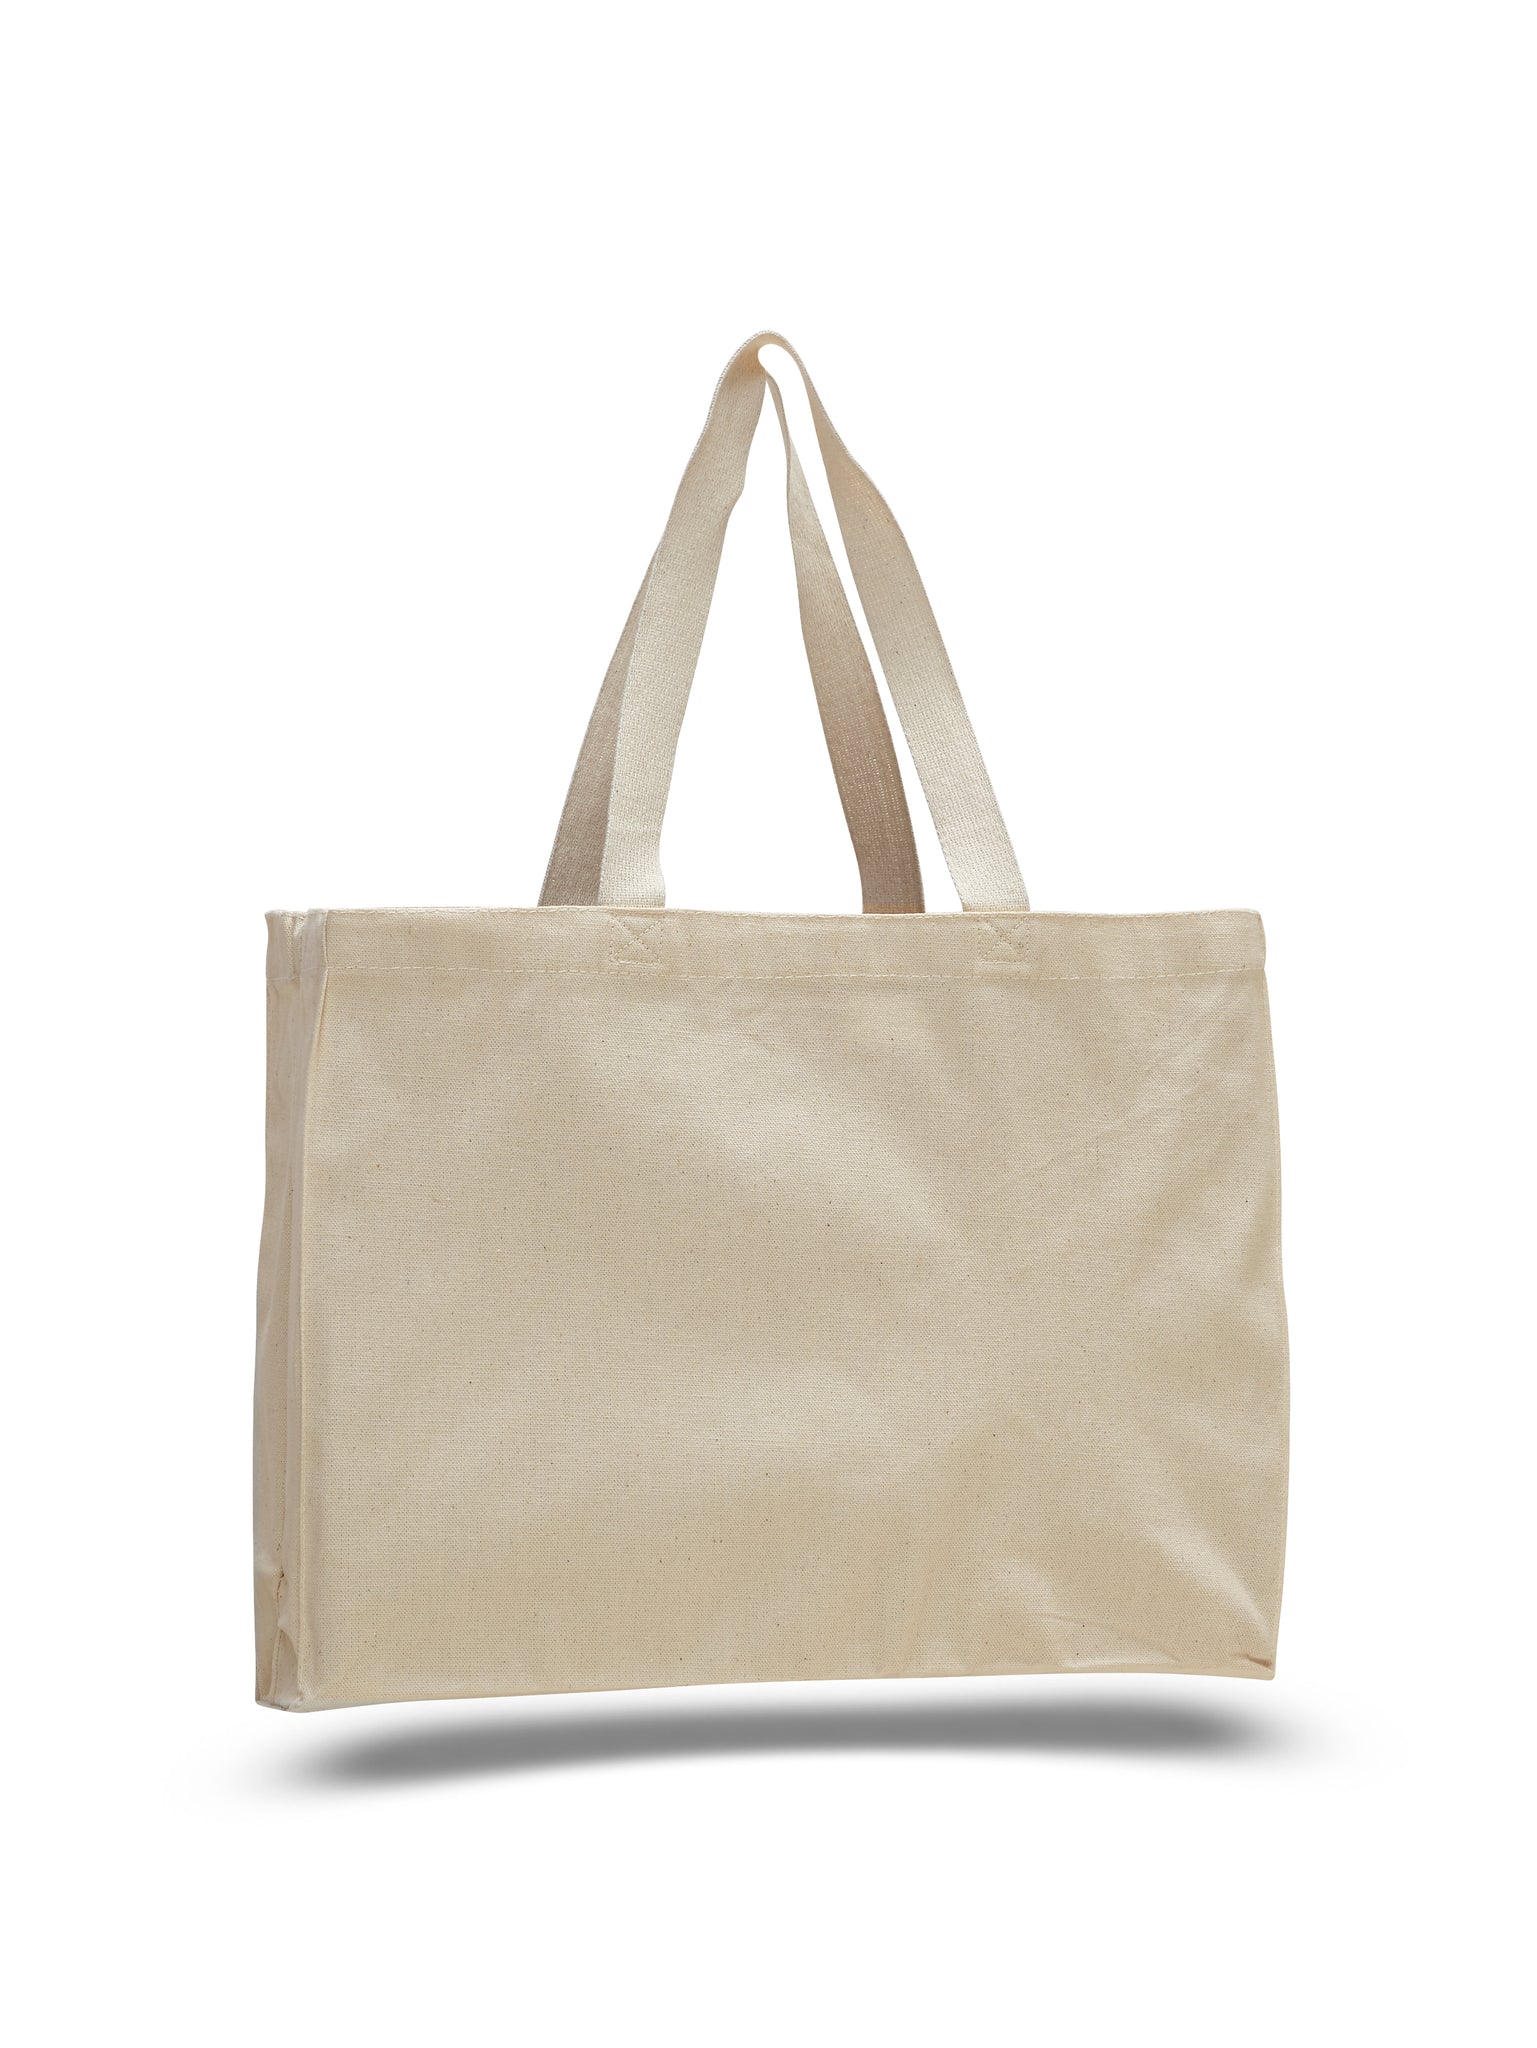 20 Tote Bag Mockup Templates Free  Pro  Design Shack